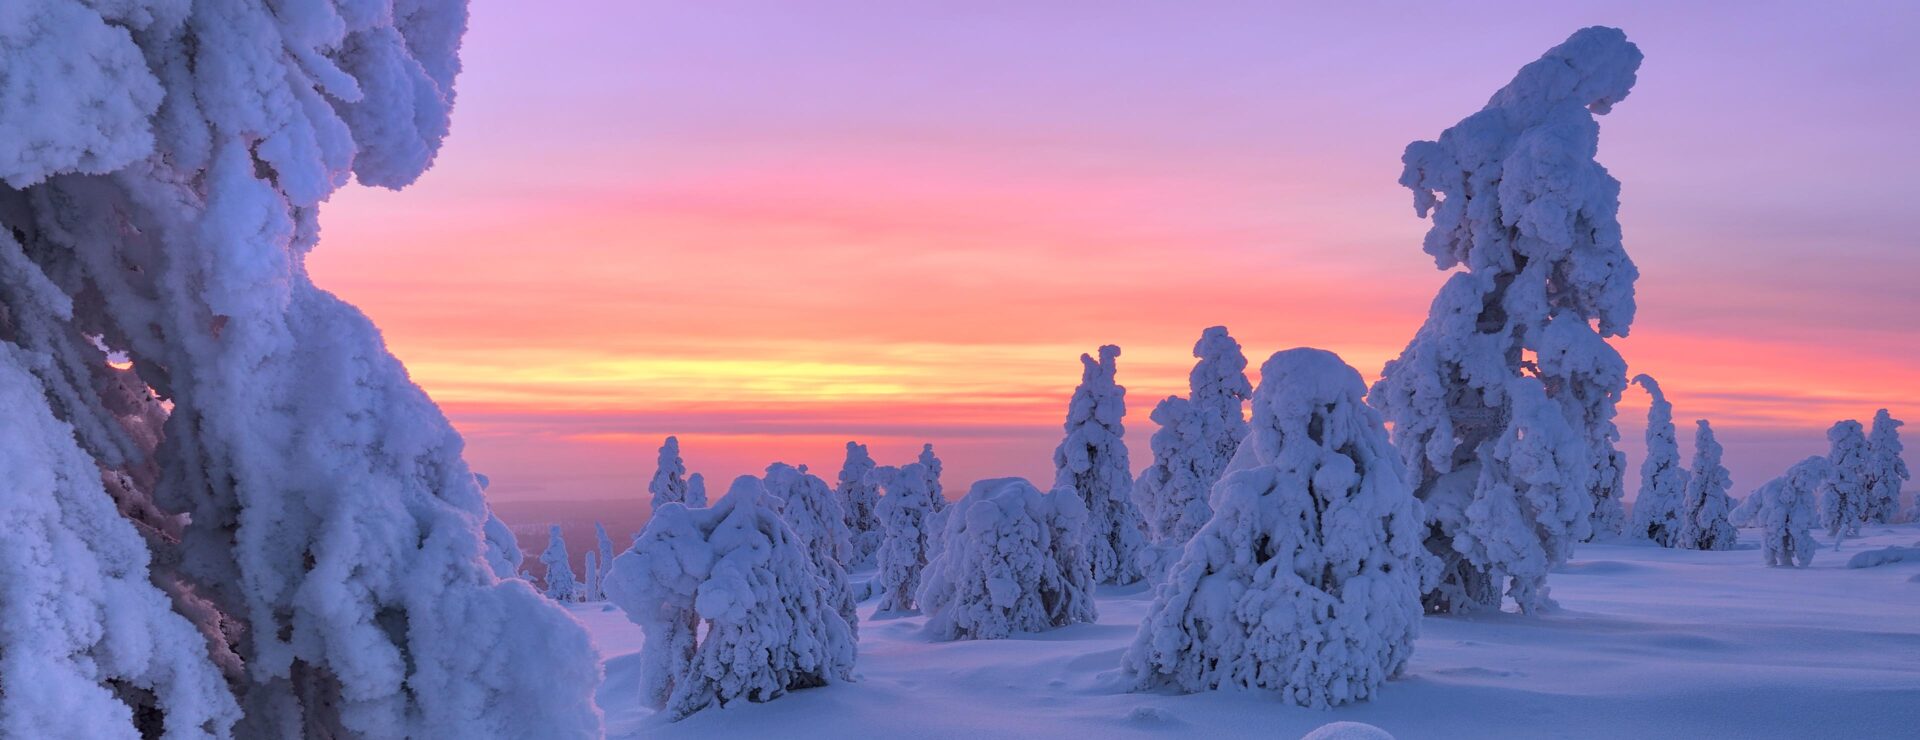 Finland Riisitunturi National Park